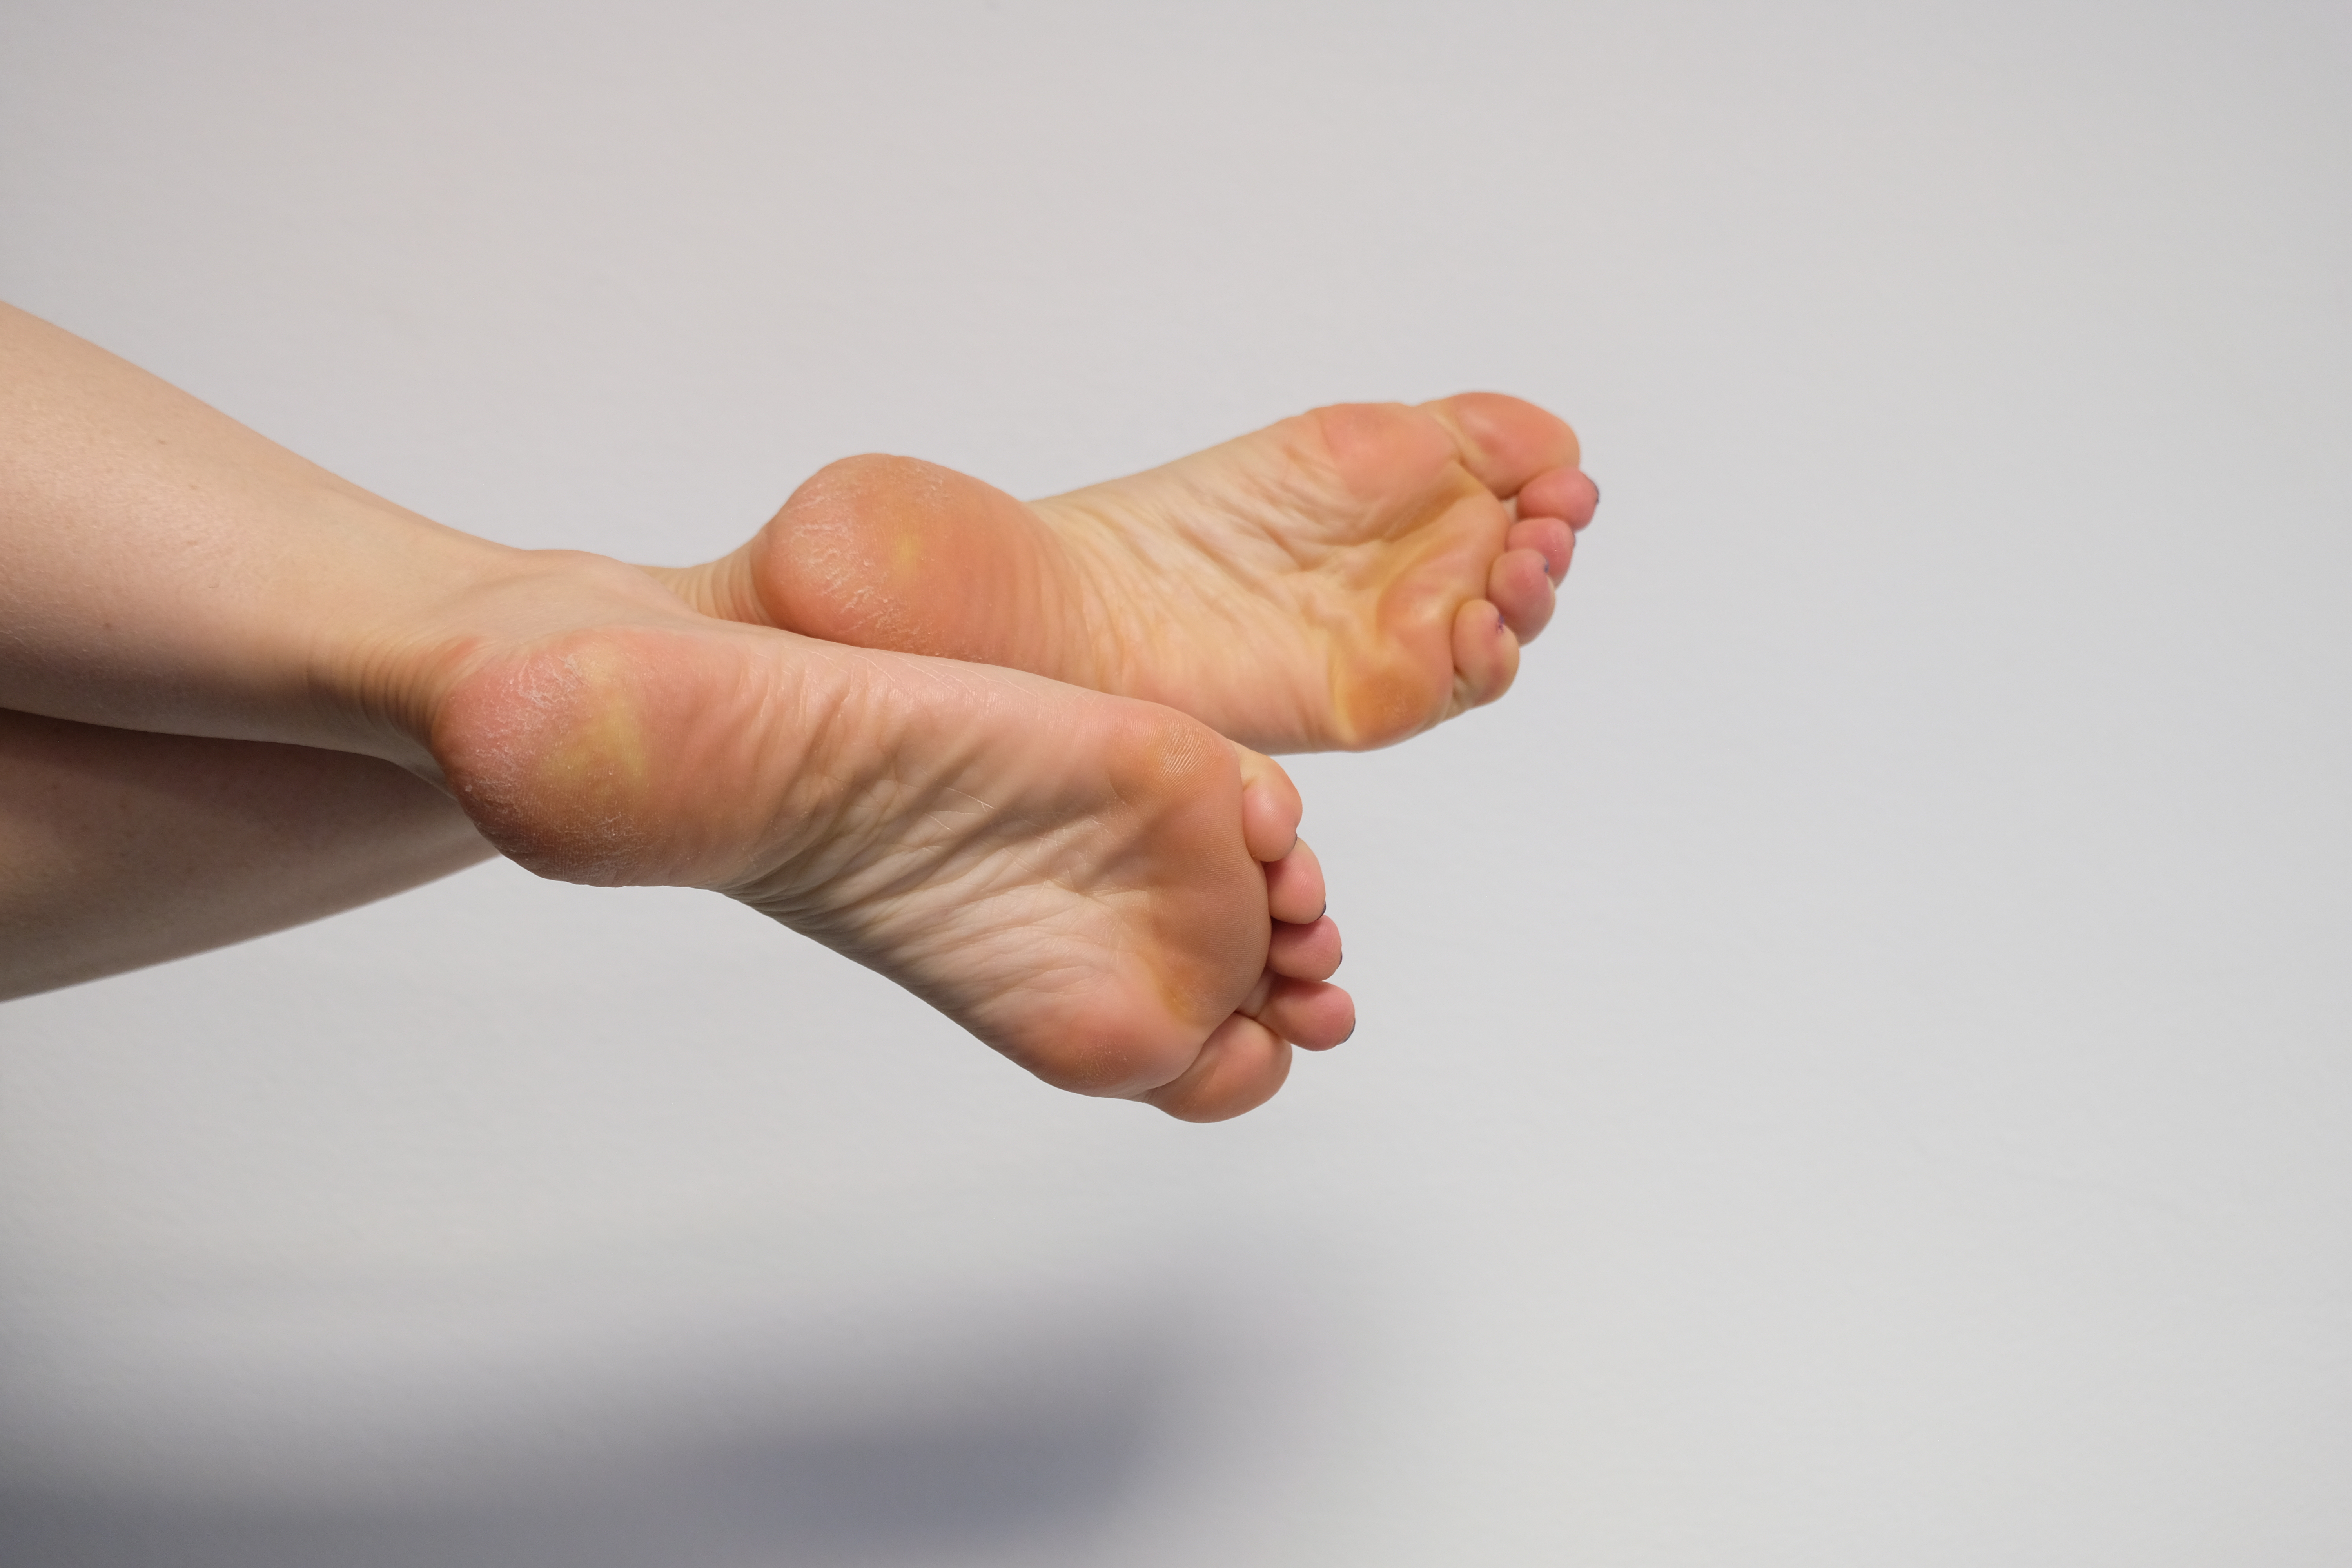 Female feet soles - CryptoFeet